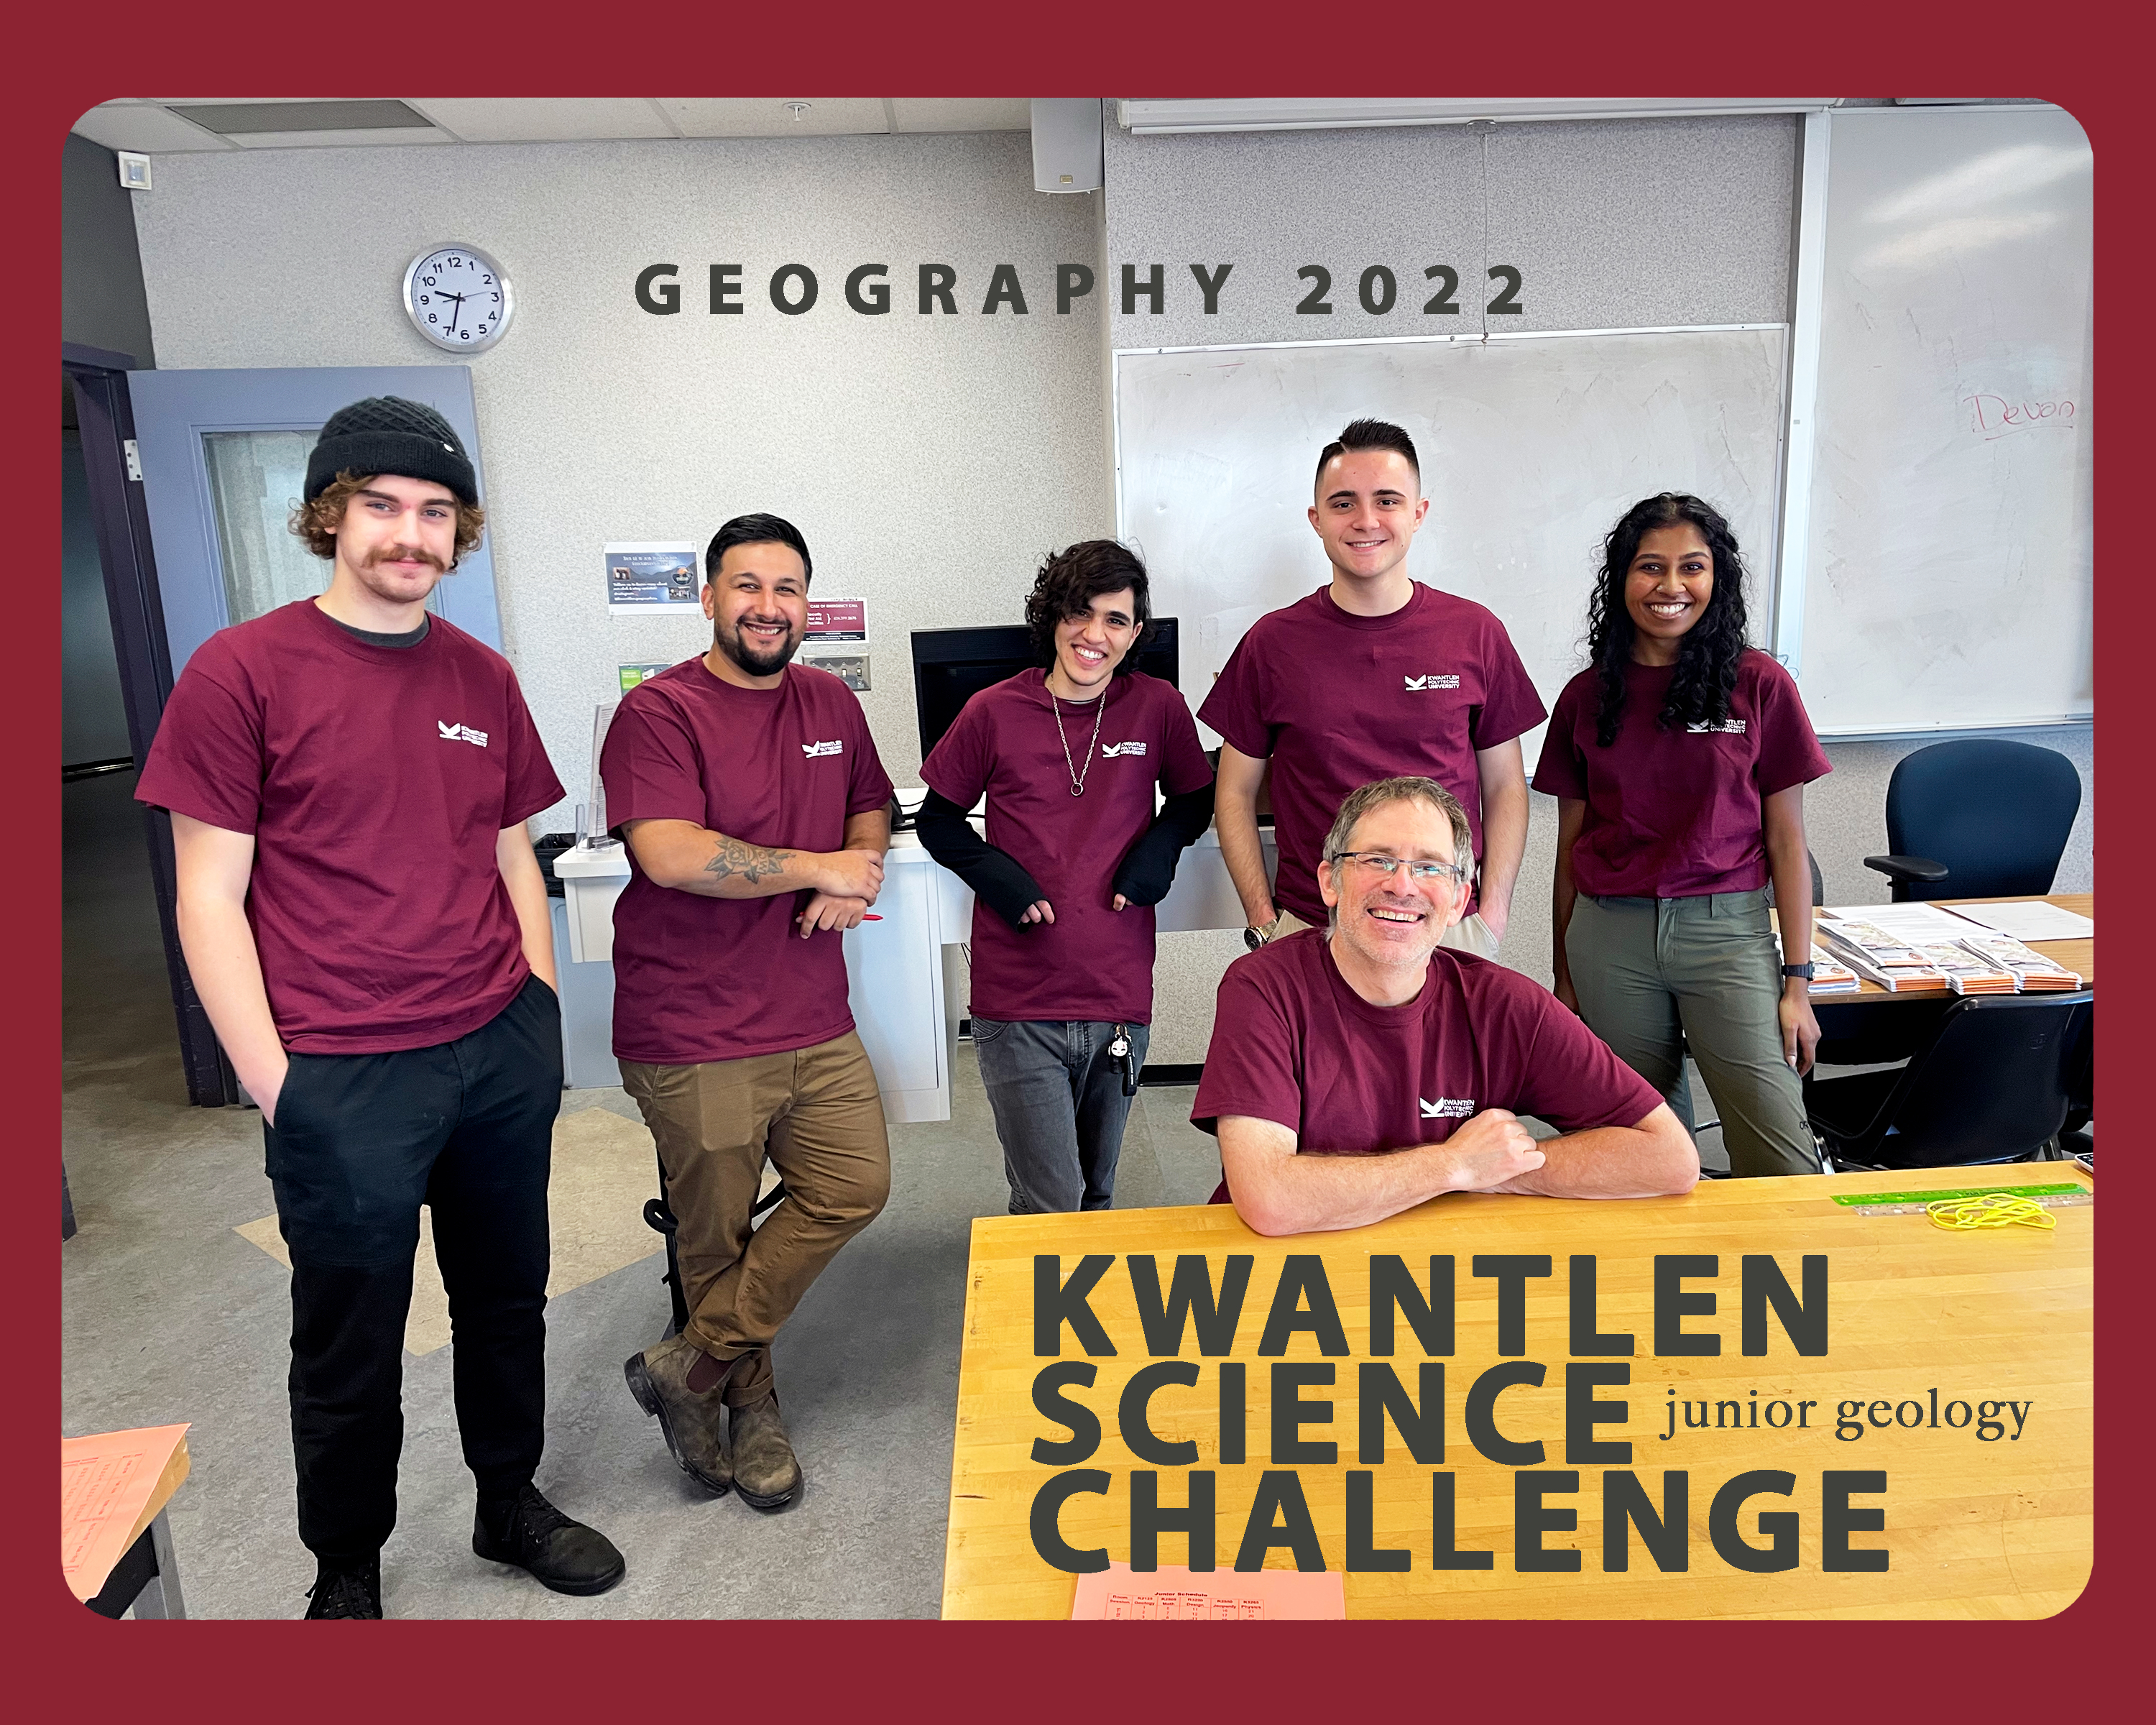 Kwantlen-Science-Challenge-(Geography-2022-Volunteers).jpg